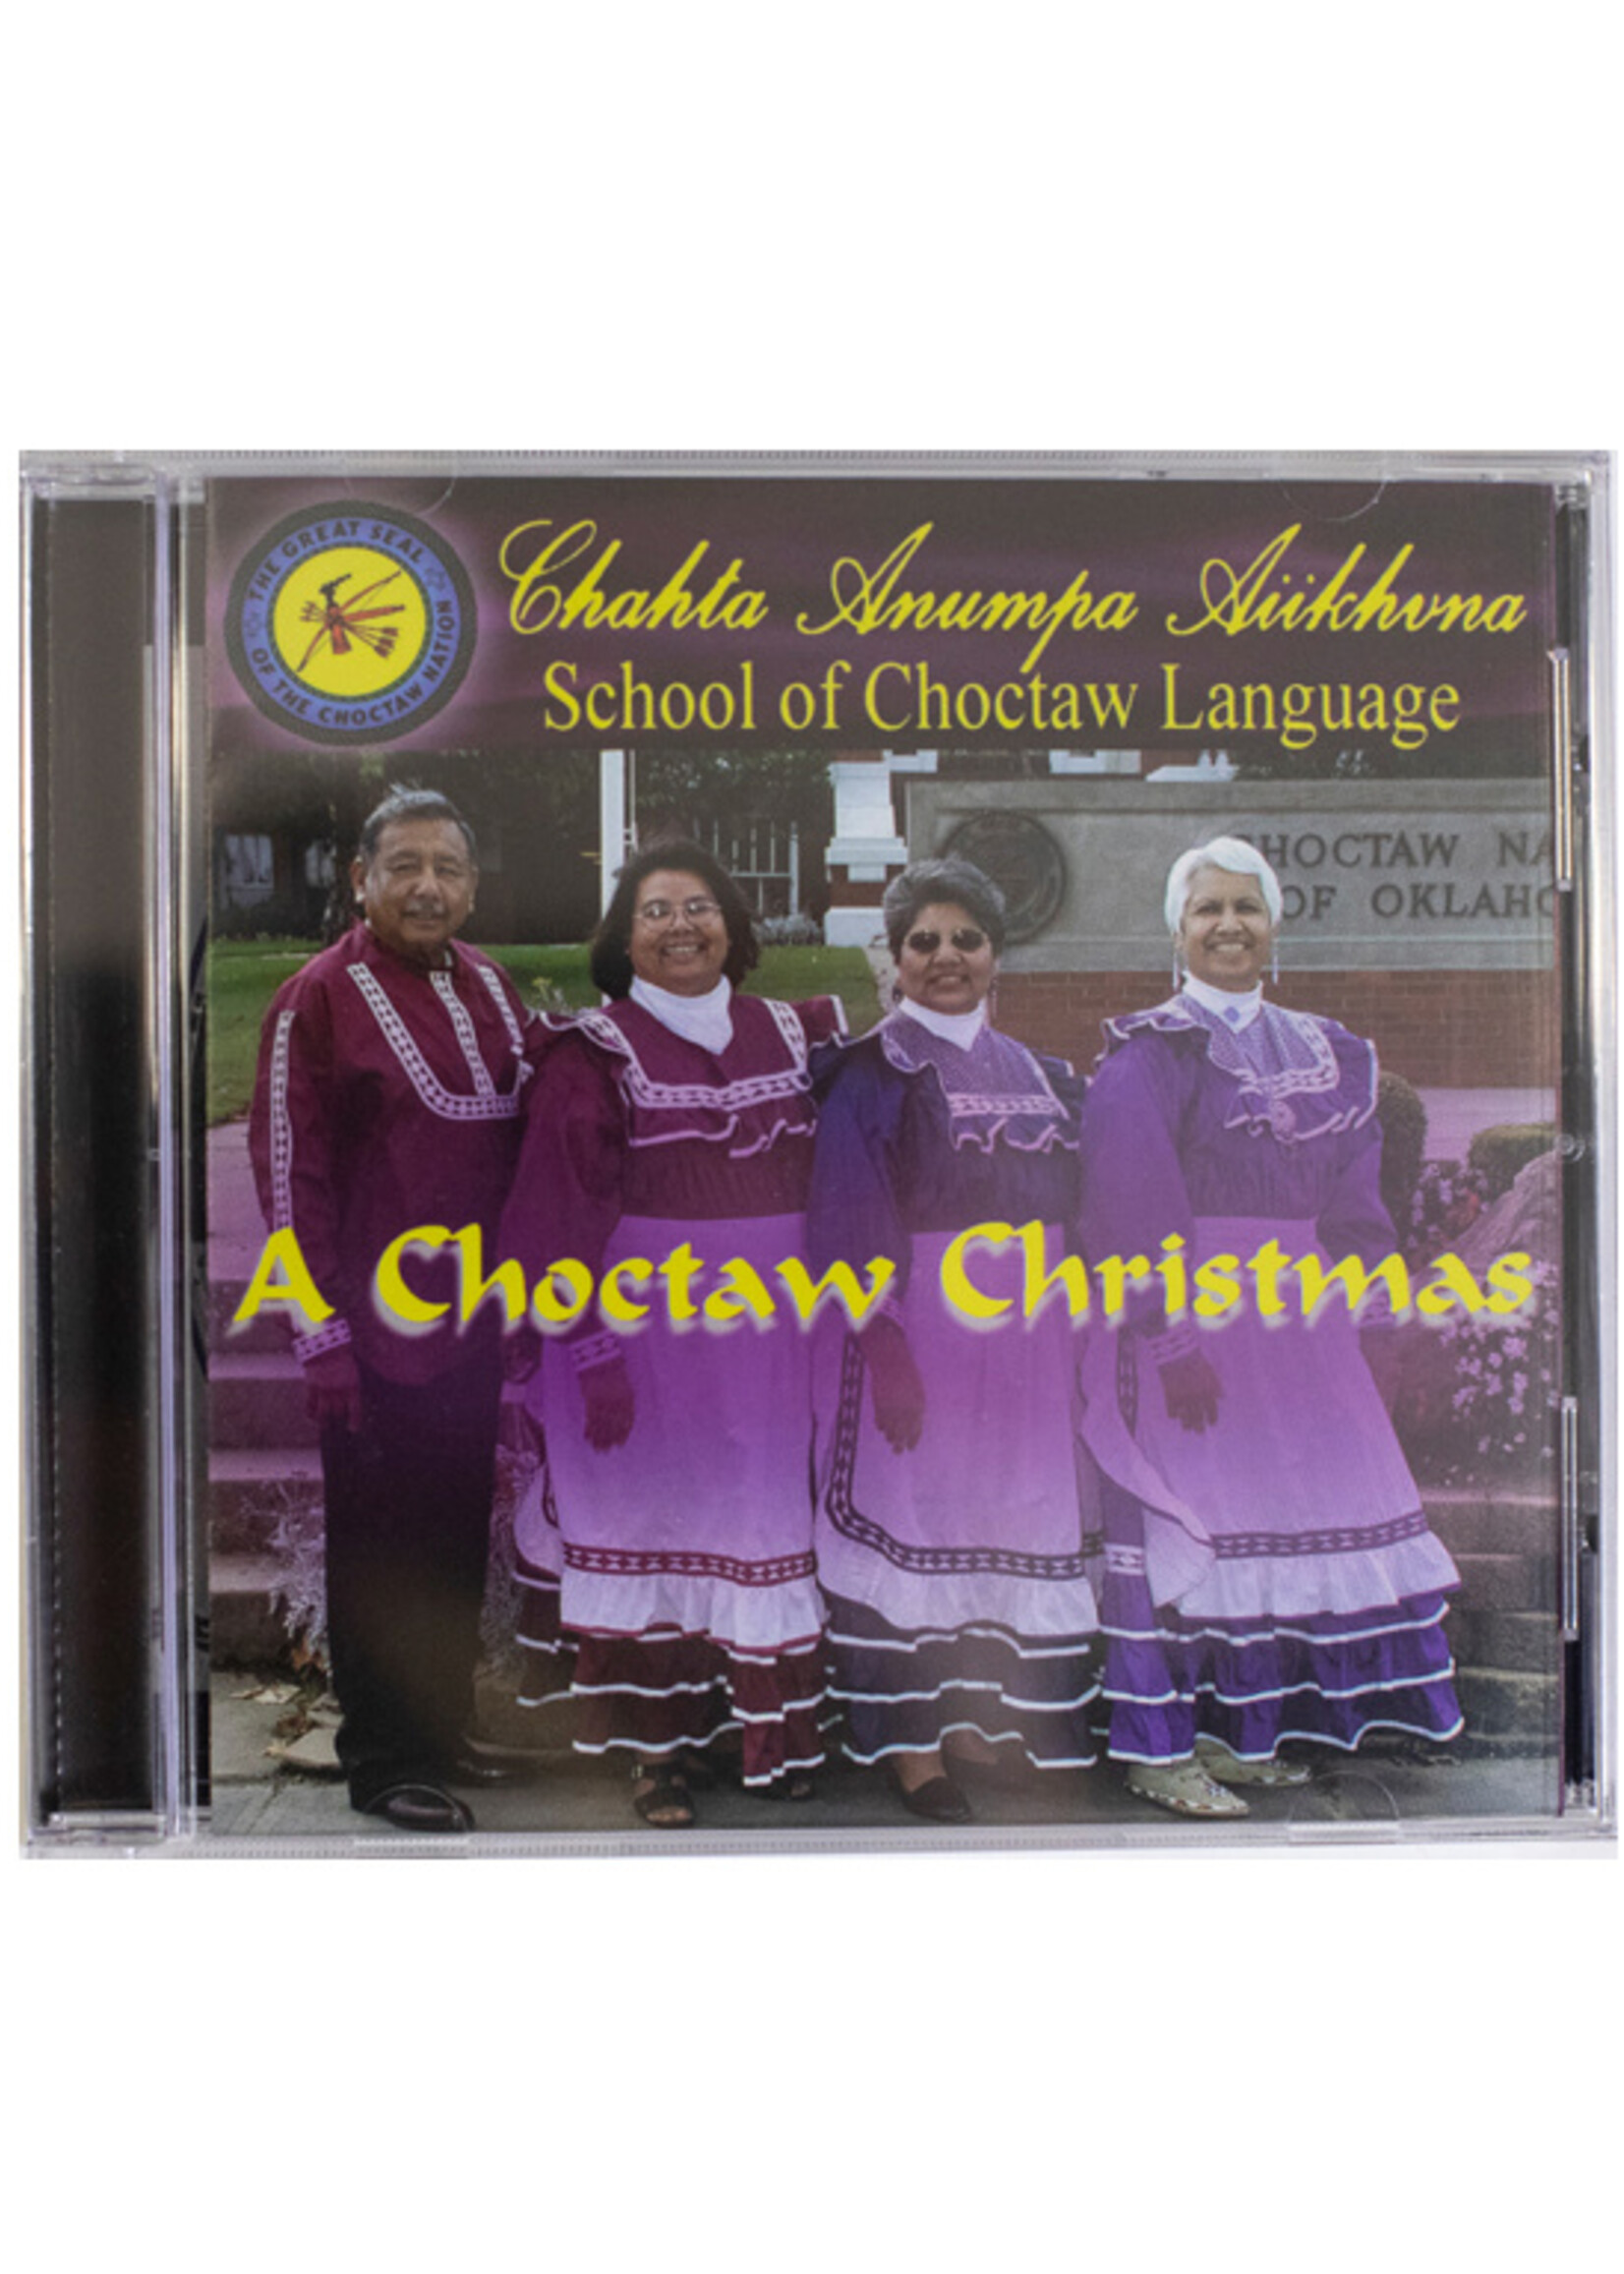 A Choctaw Christmas"  CD